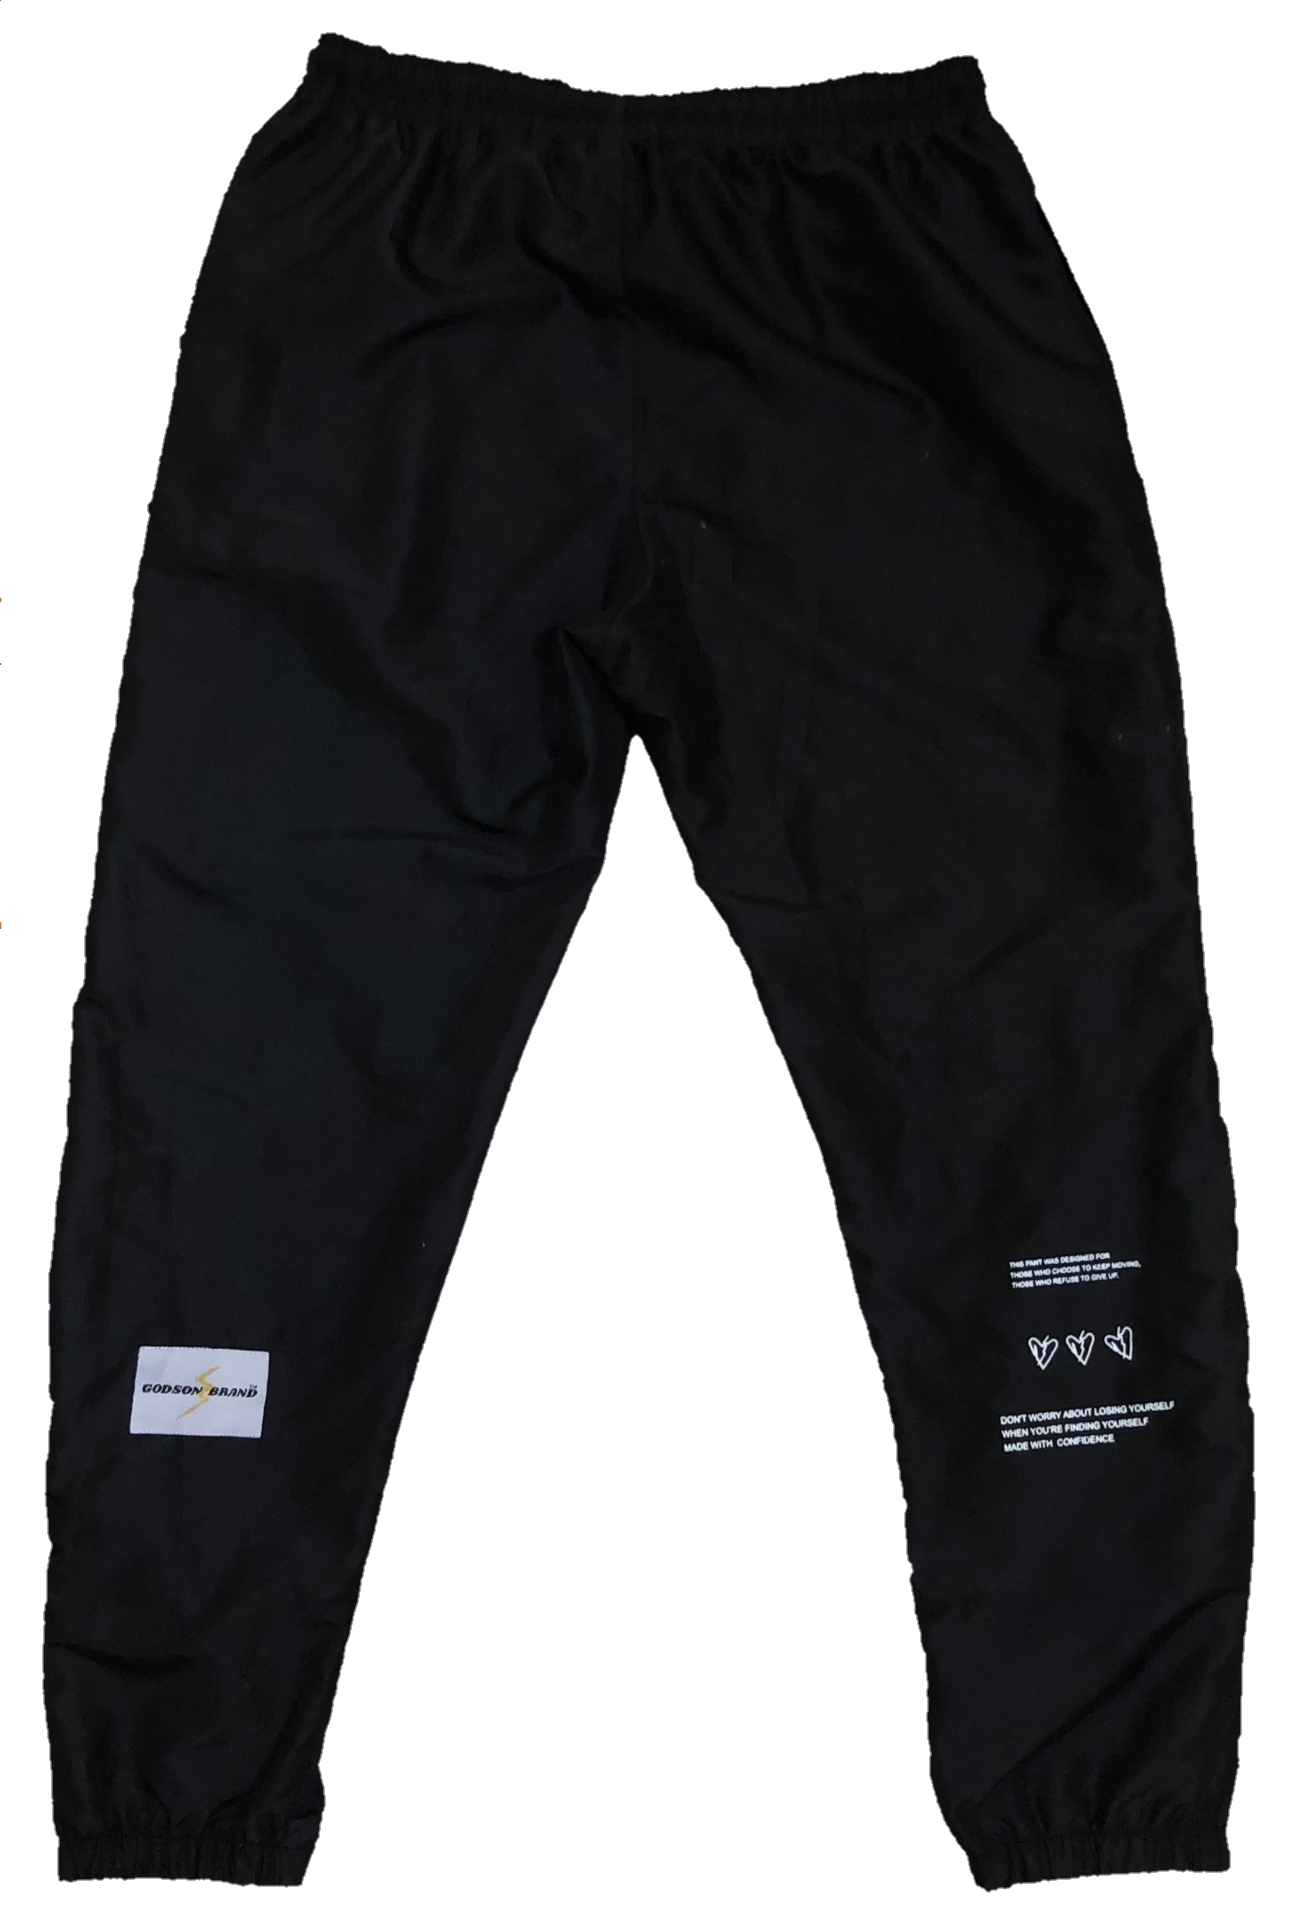 adidas Originals Tiro 21 Track Pants Men's Size XL New NWT Black/White |  eBay